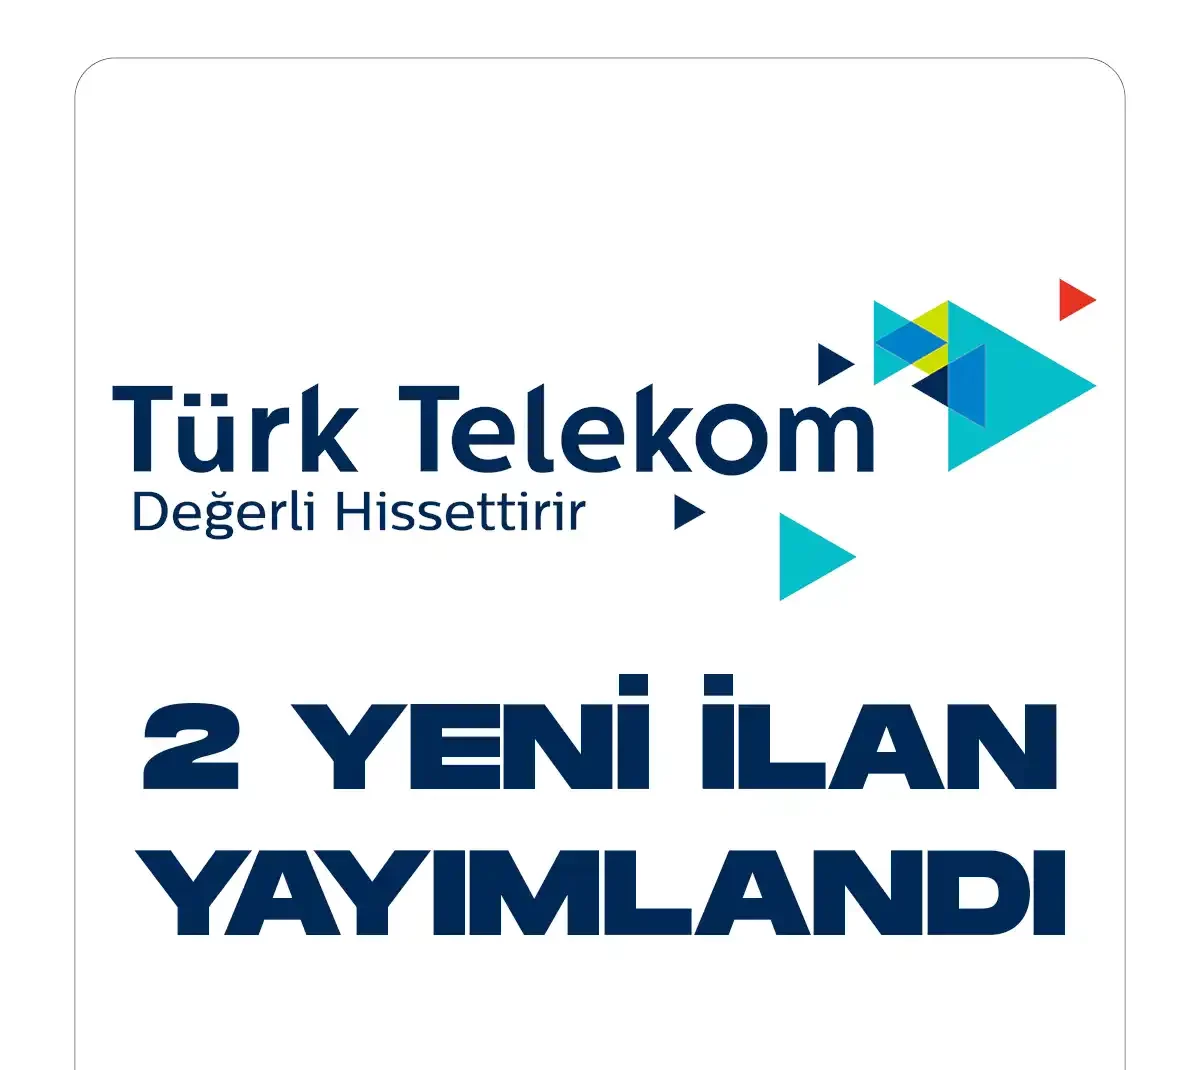 Türk Telekom Personel Alımı